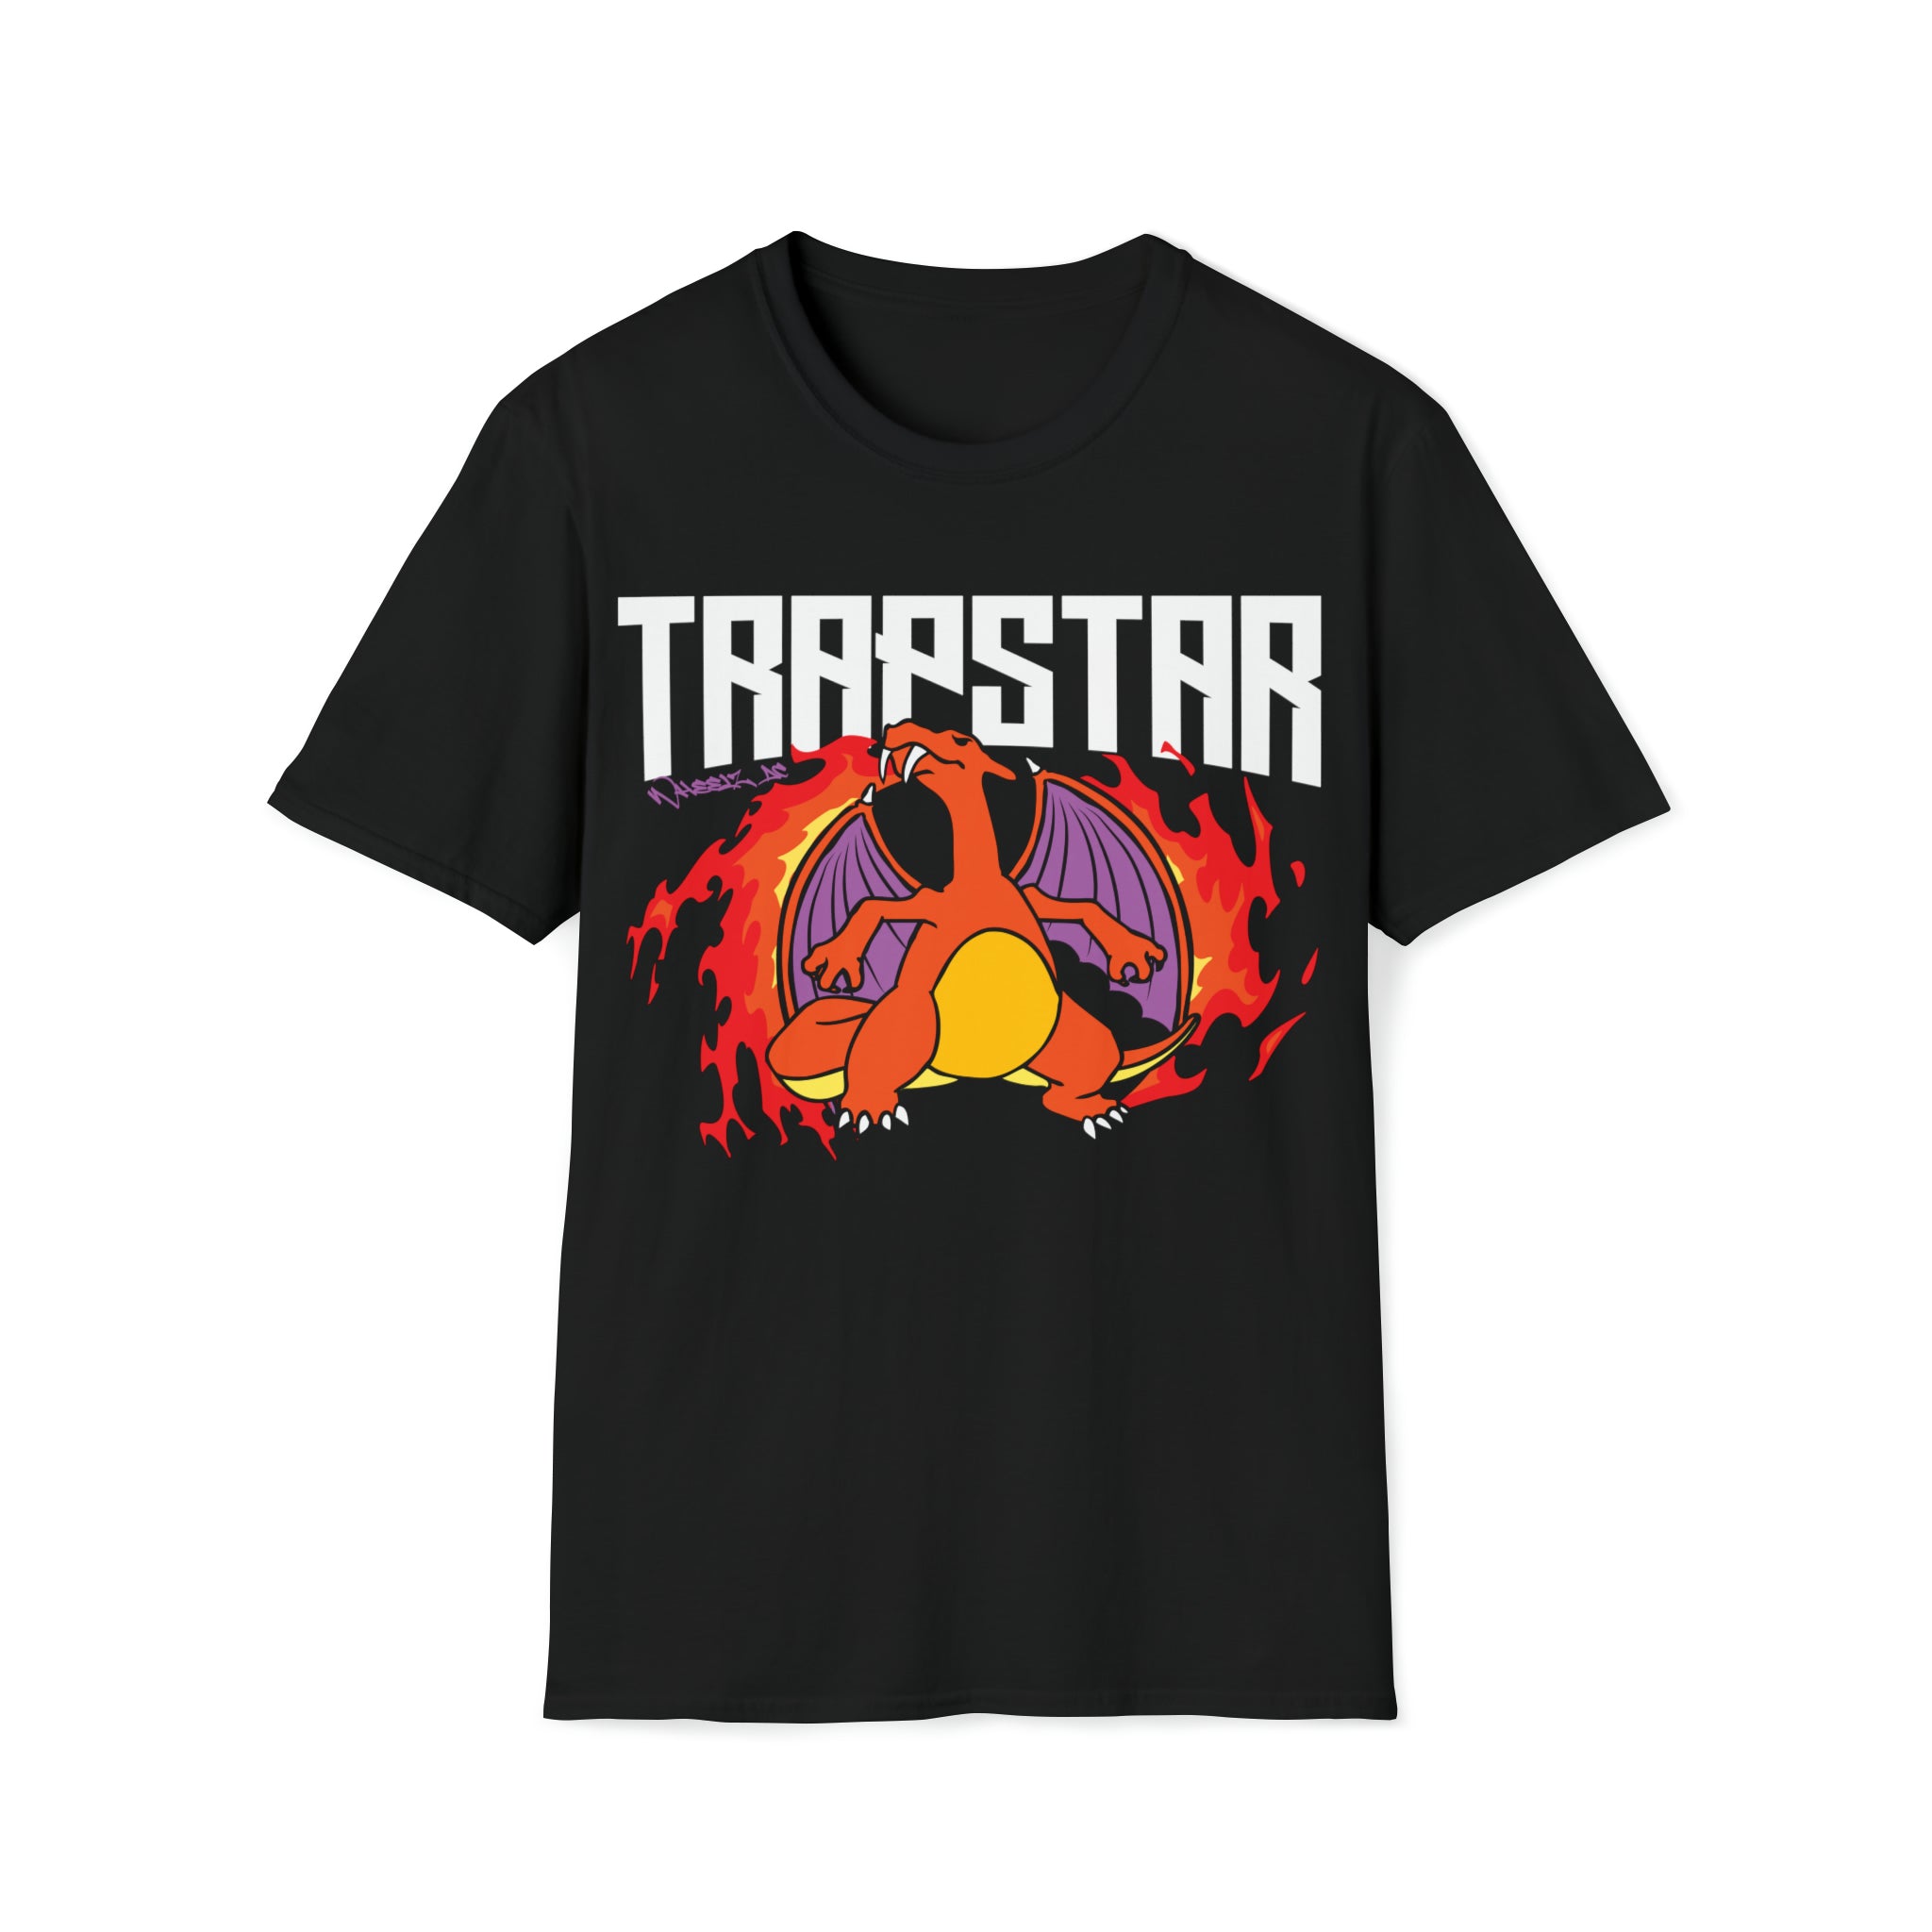 TRAP STAR T-shirt, Dragon fire, exclusive design